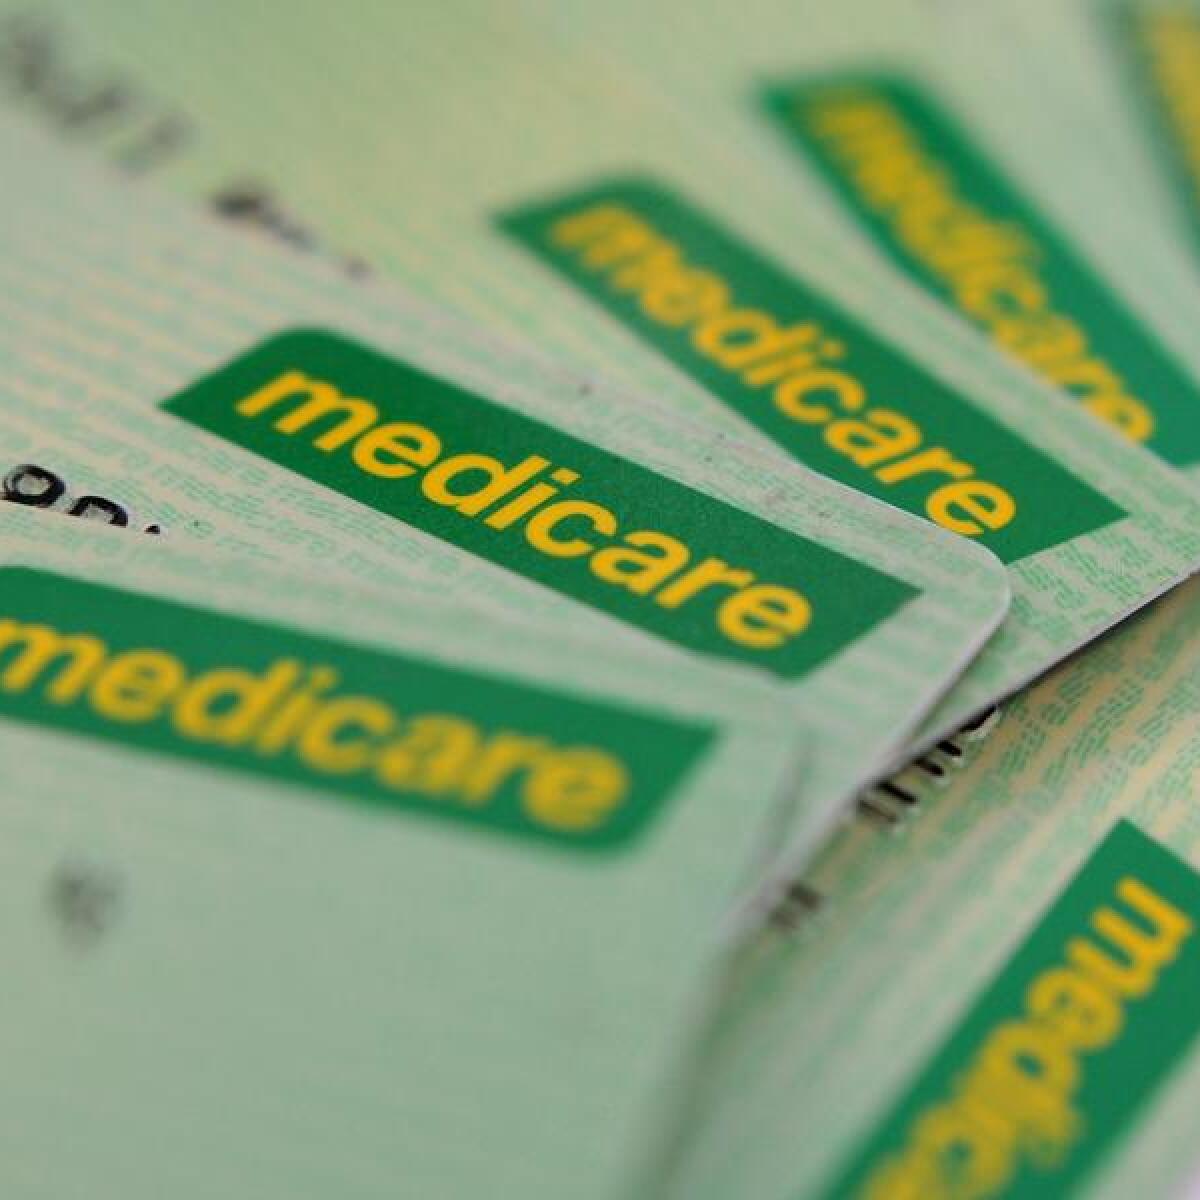 Medicare healthcare cards in Sydney